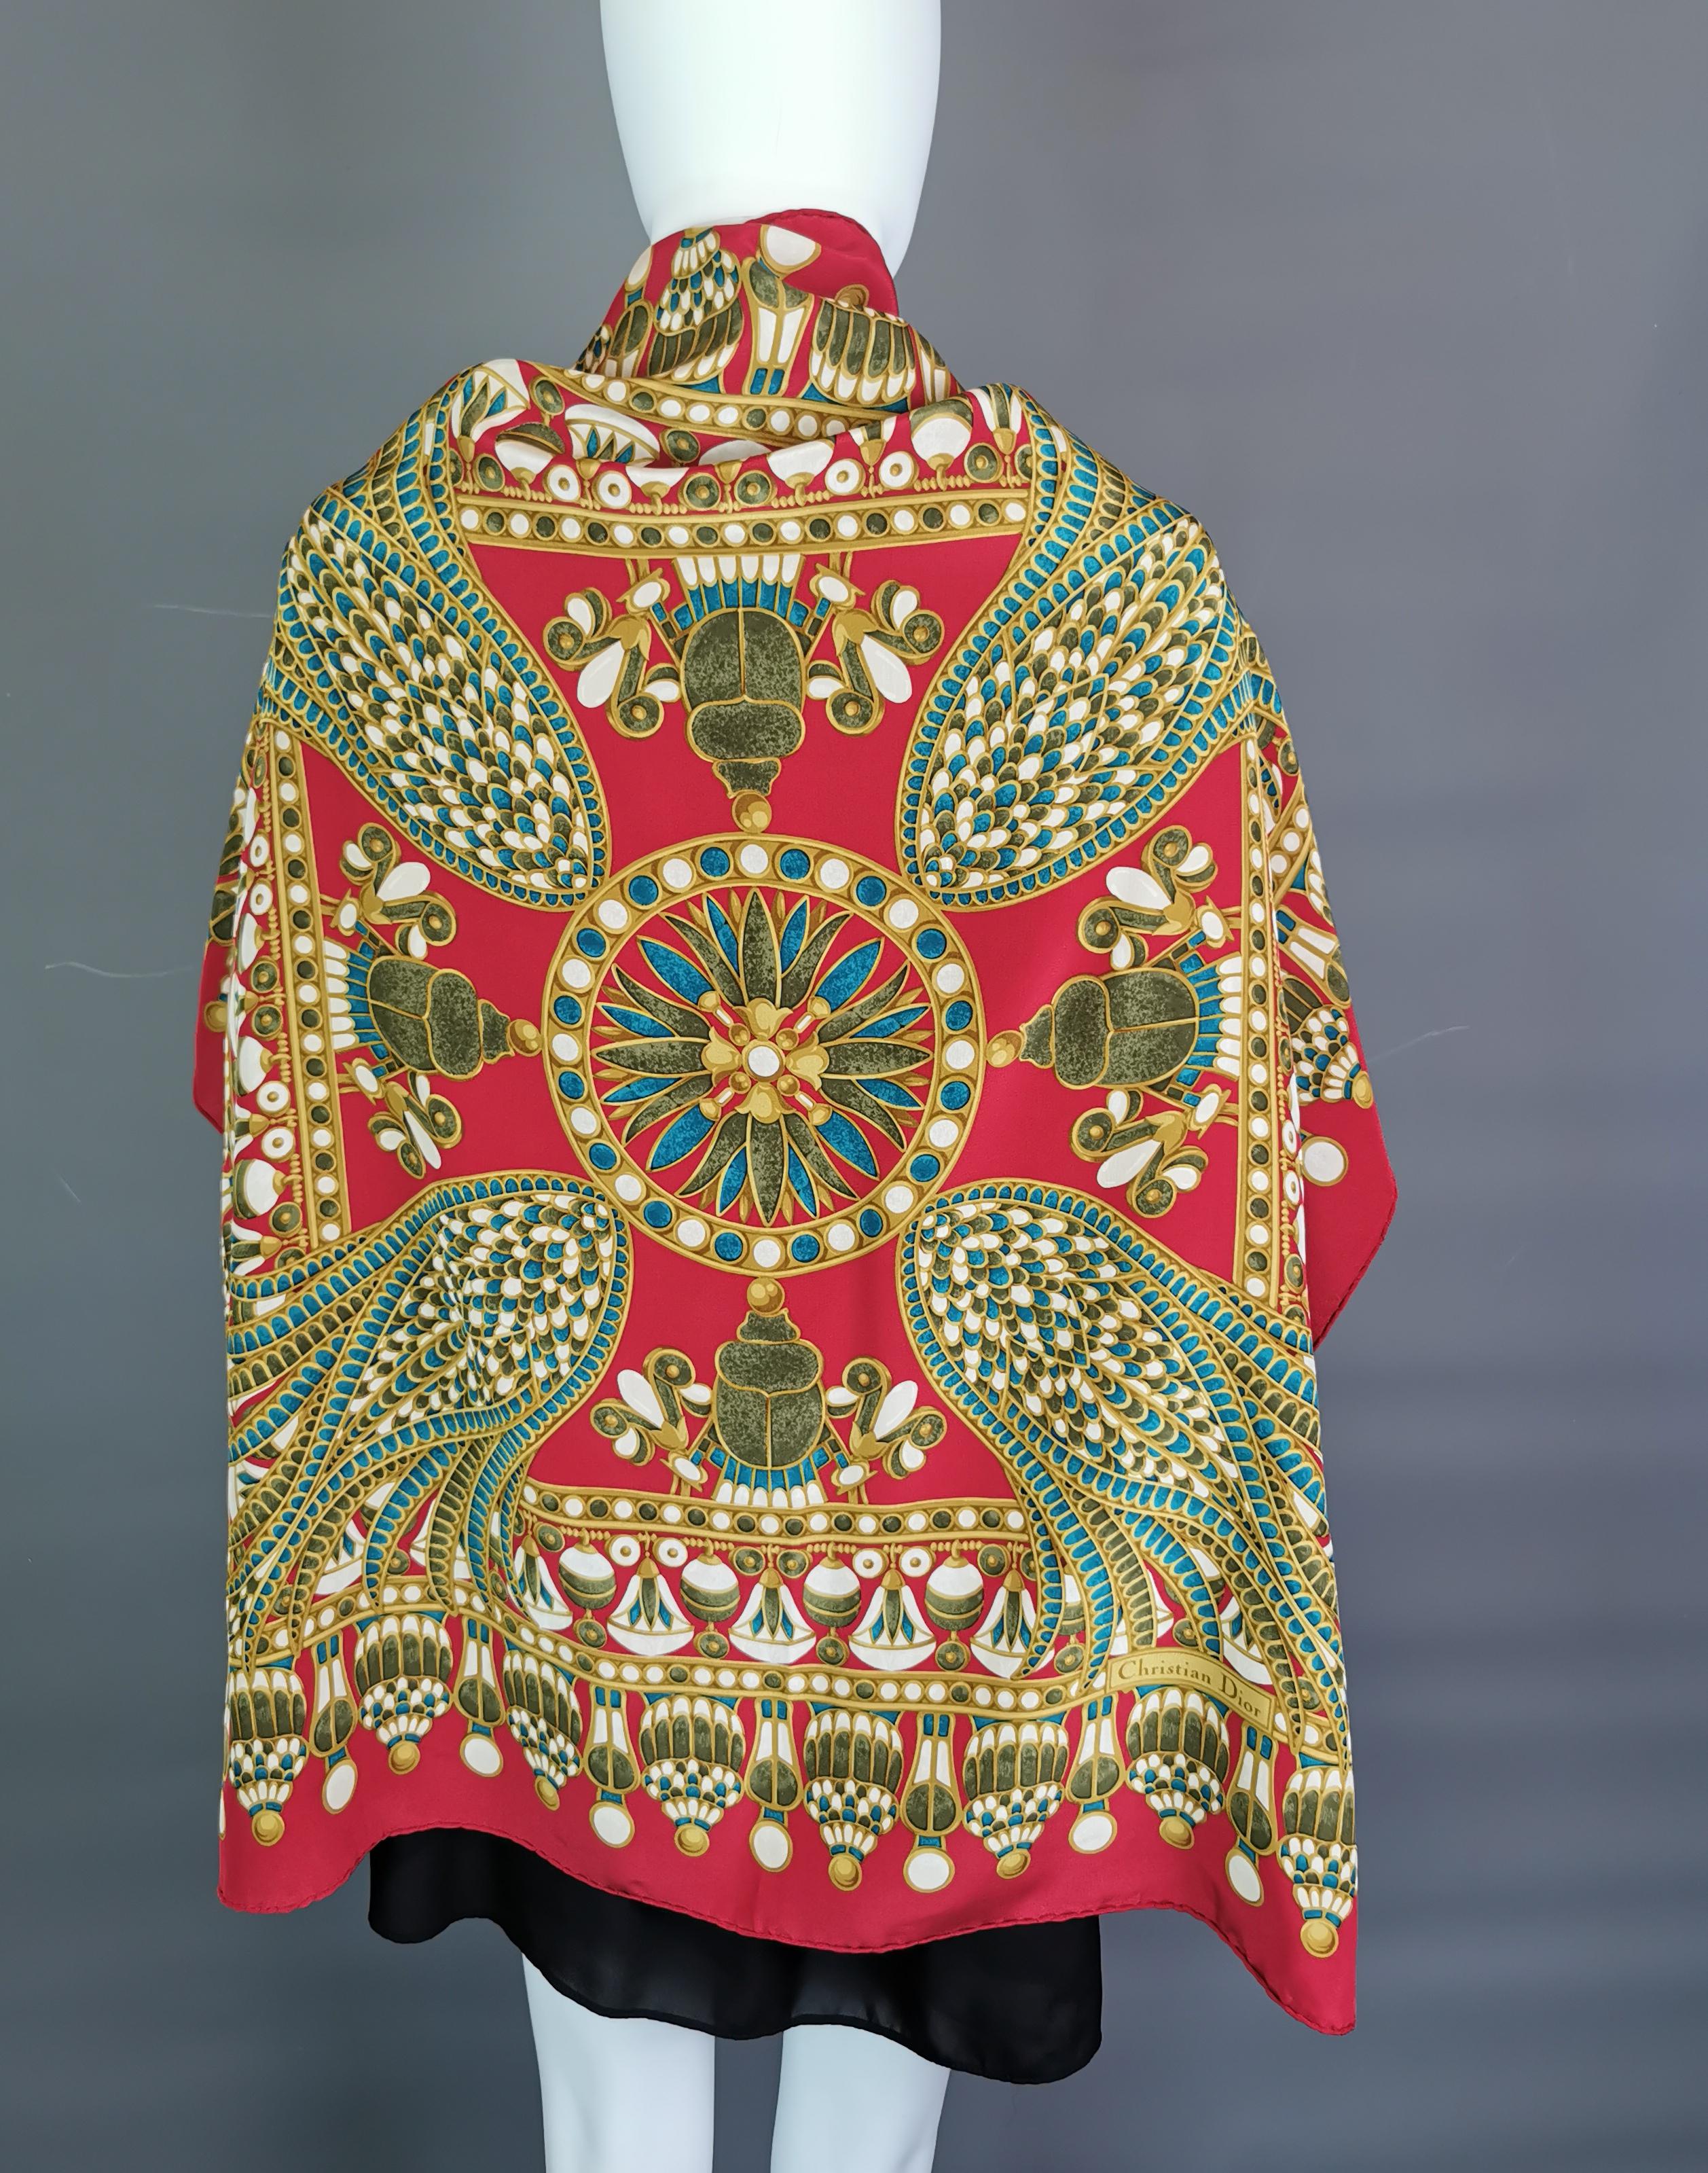 Christian Dior silk scarf, Egyptian revival, Scarab beetle  4